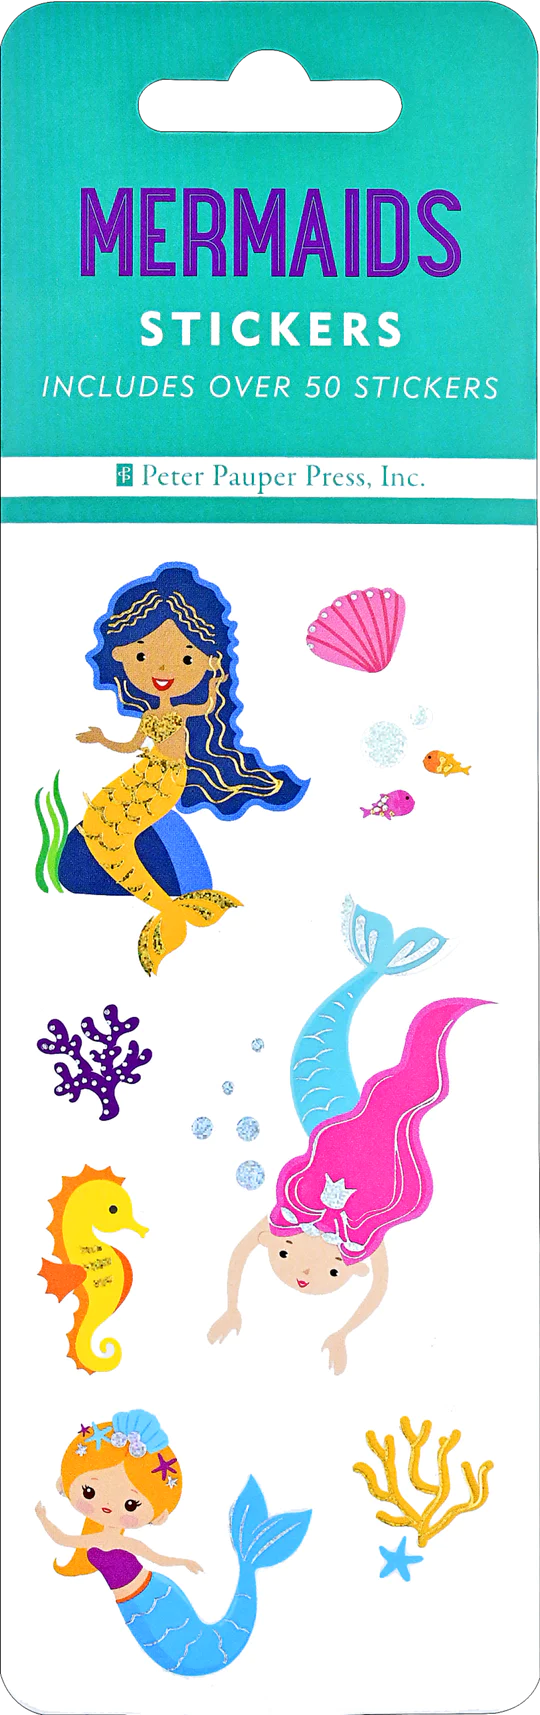 Mermaids Stickers